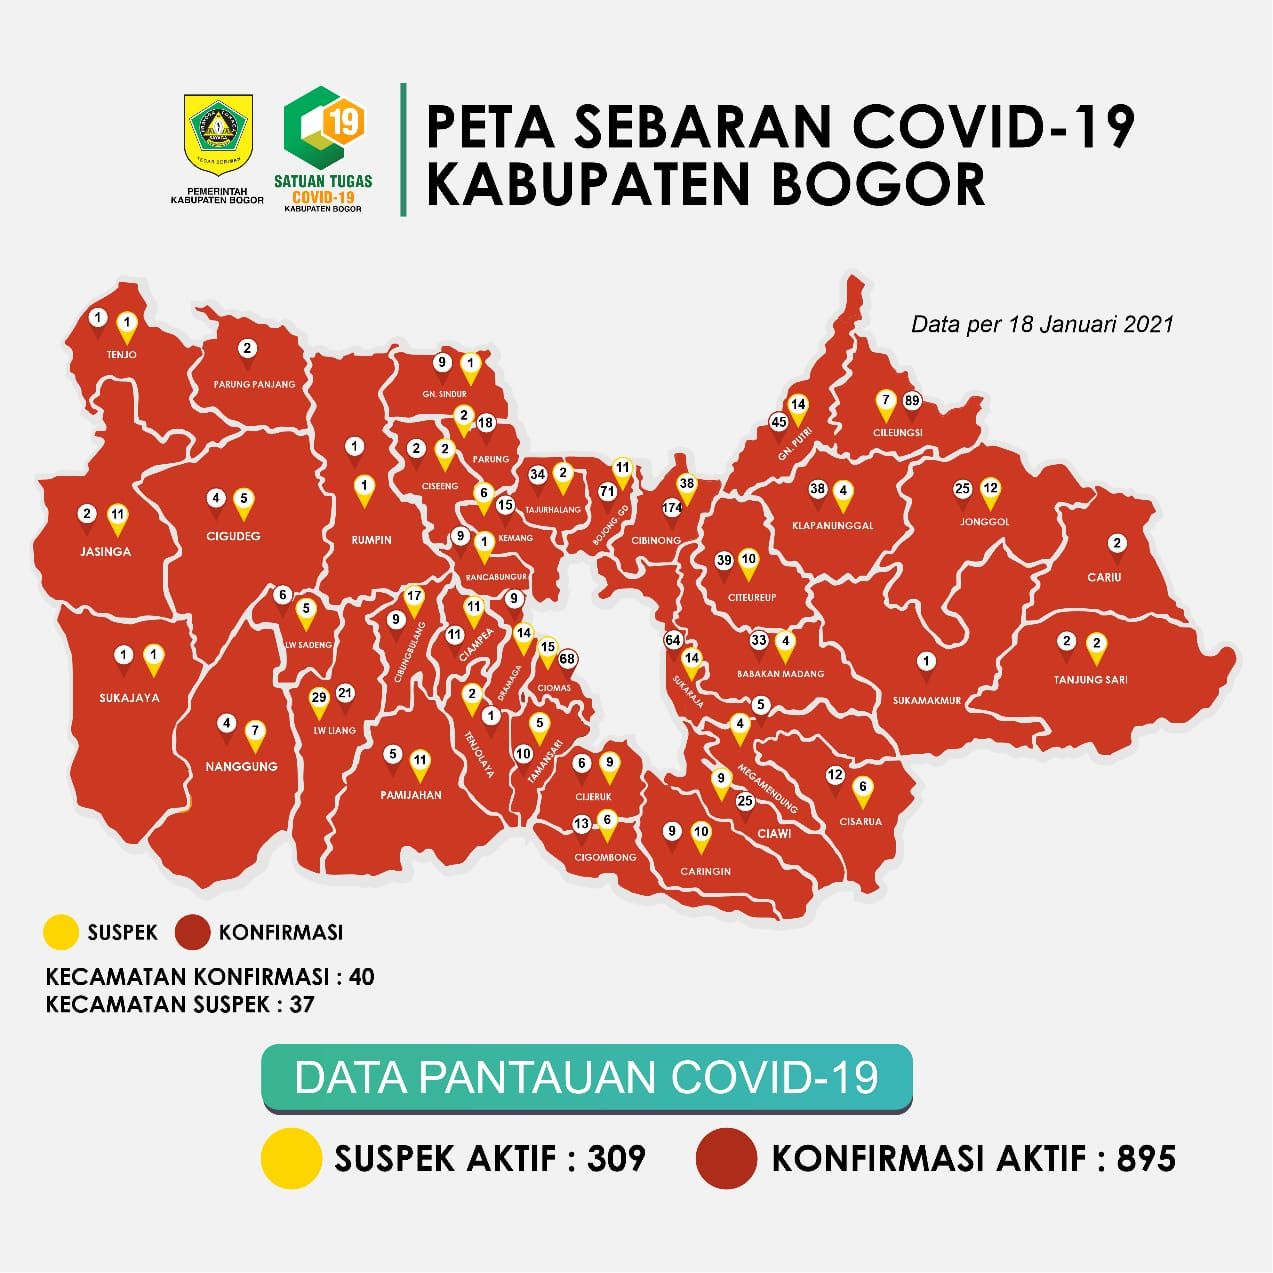 Peta sebaran Covid-19 Kabupaten Bogor per 18 Januari 2021.*